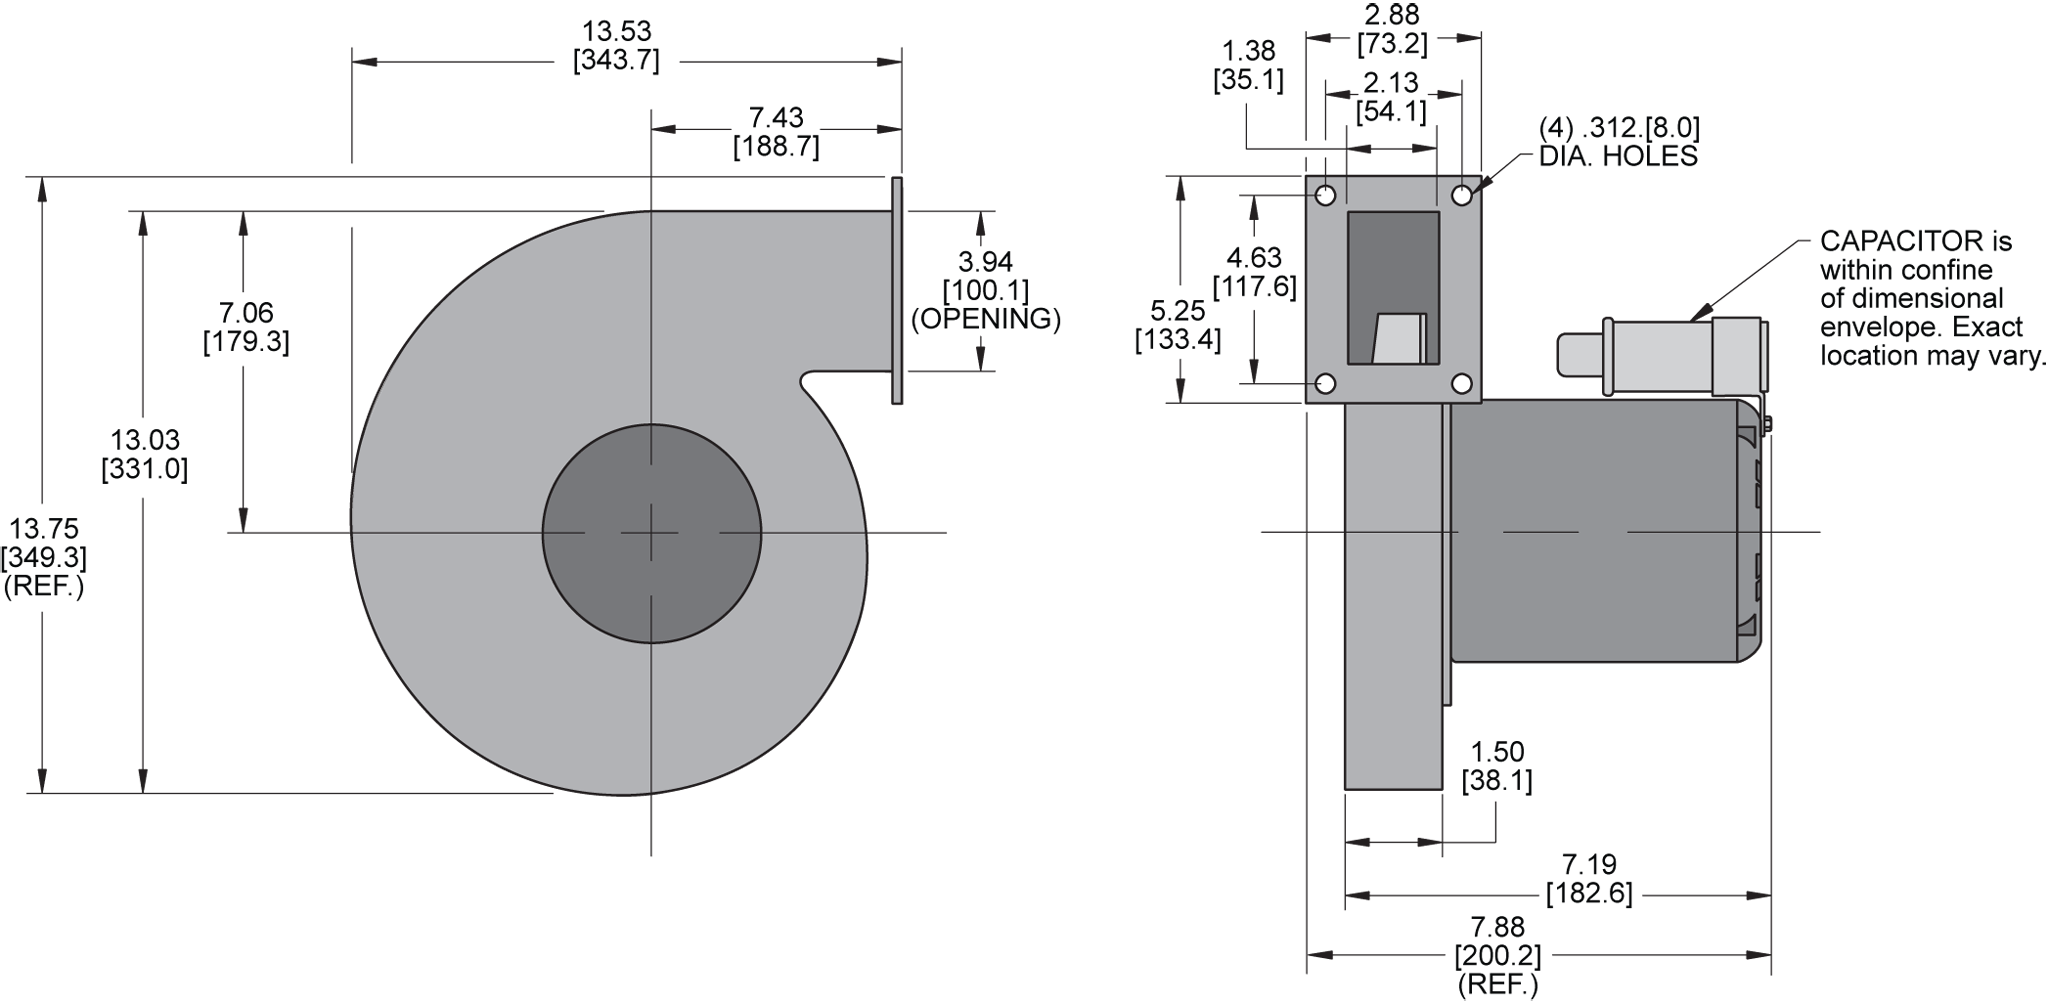 KBR125 Radial Blower general arrangement drawing